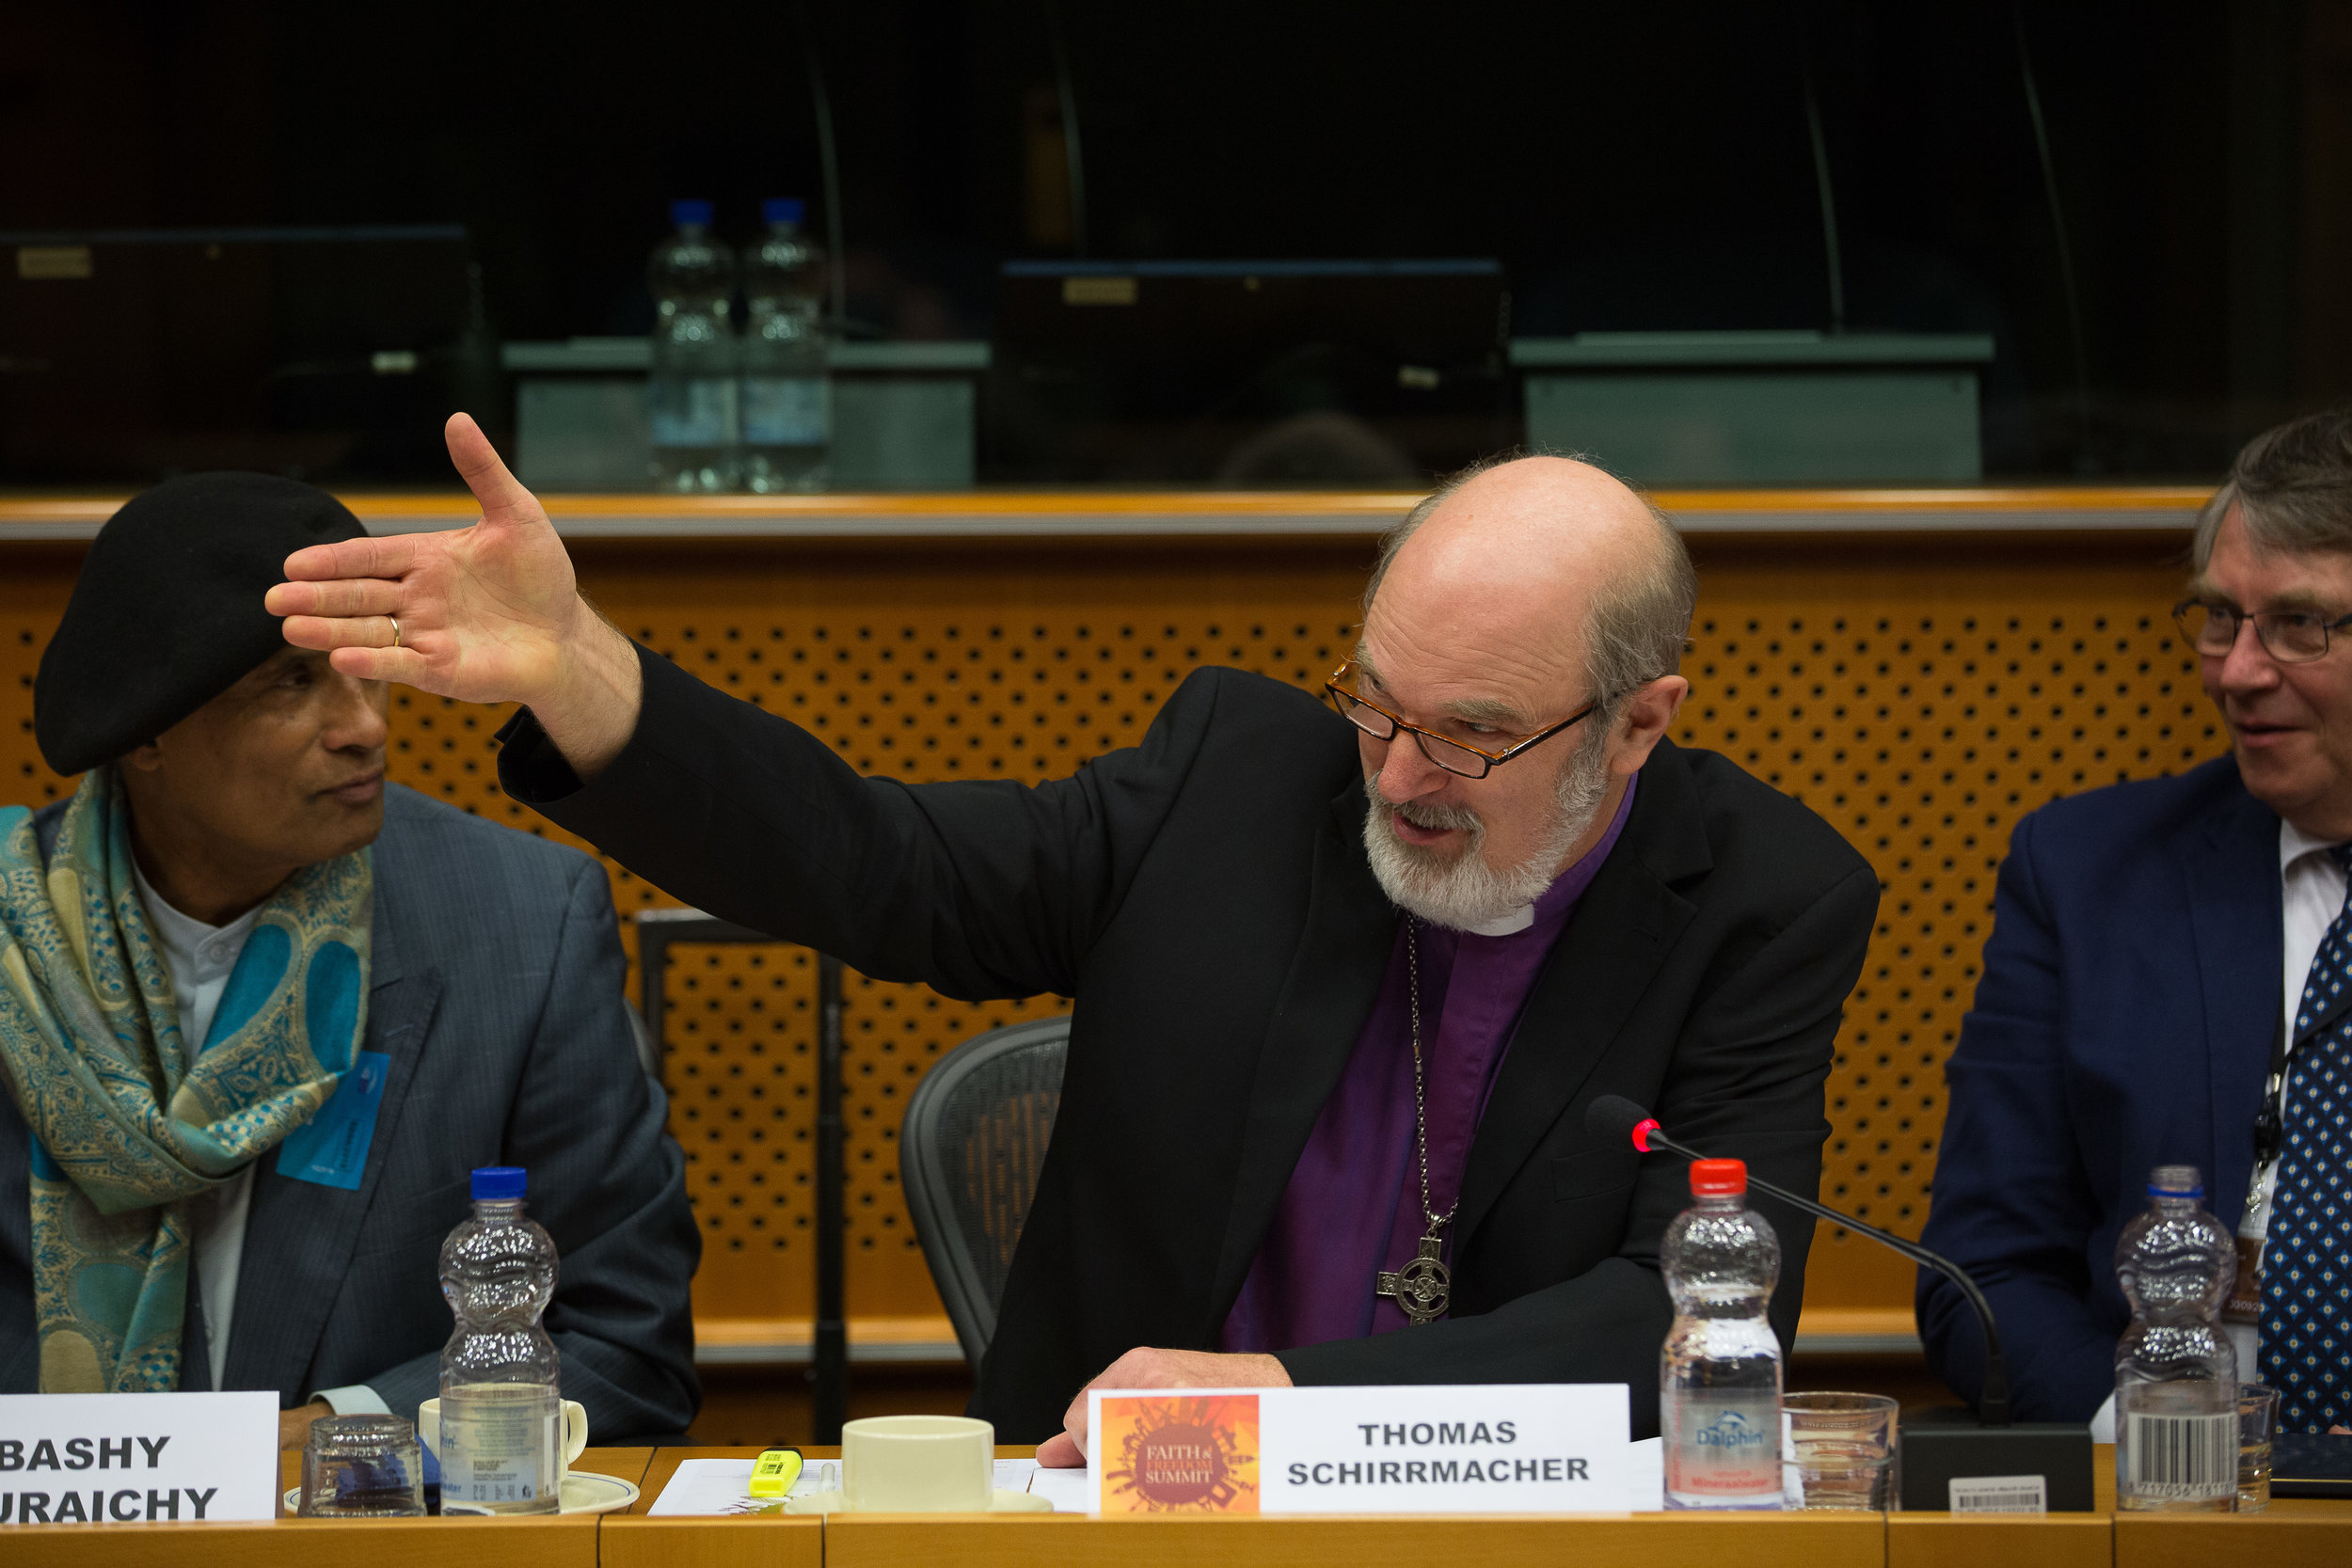 Archbishop Thomas Schirrmacher - President of the International Society for Human Rights